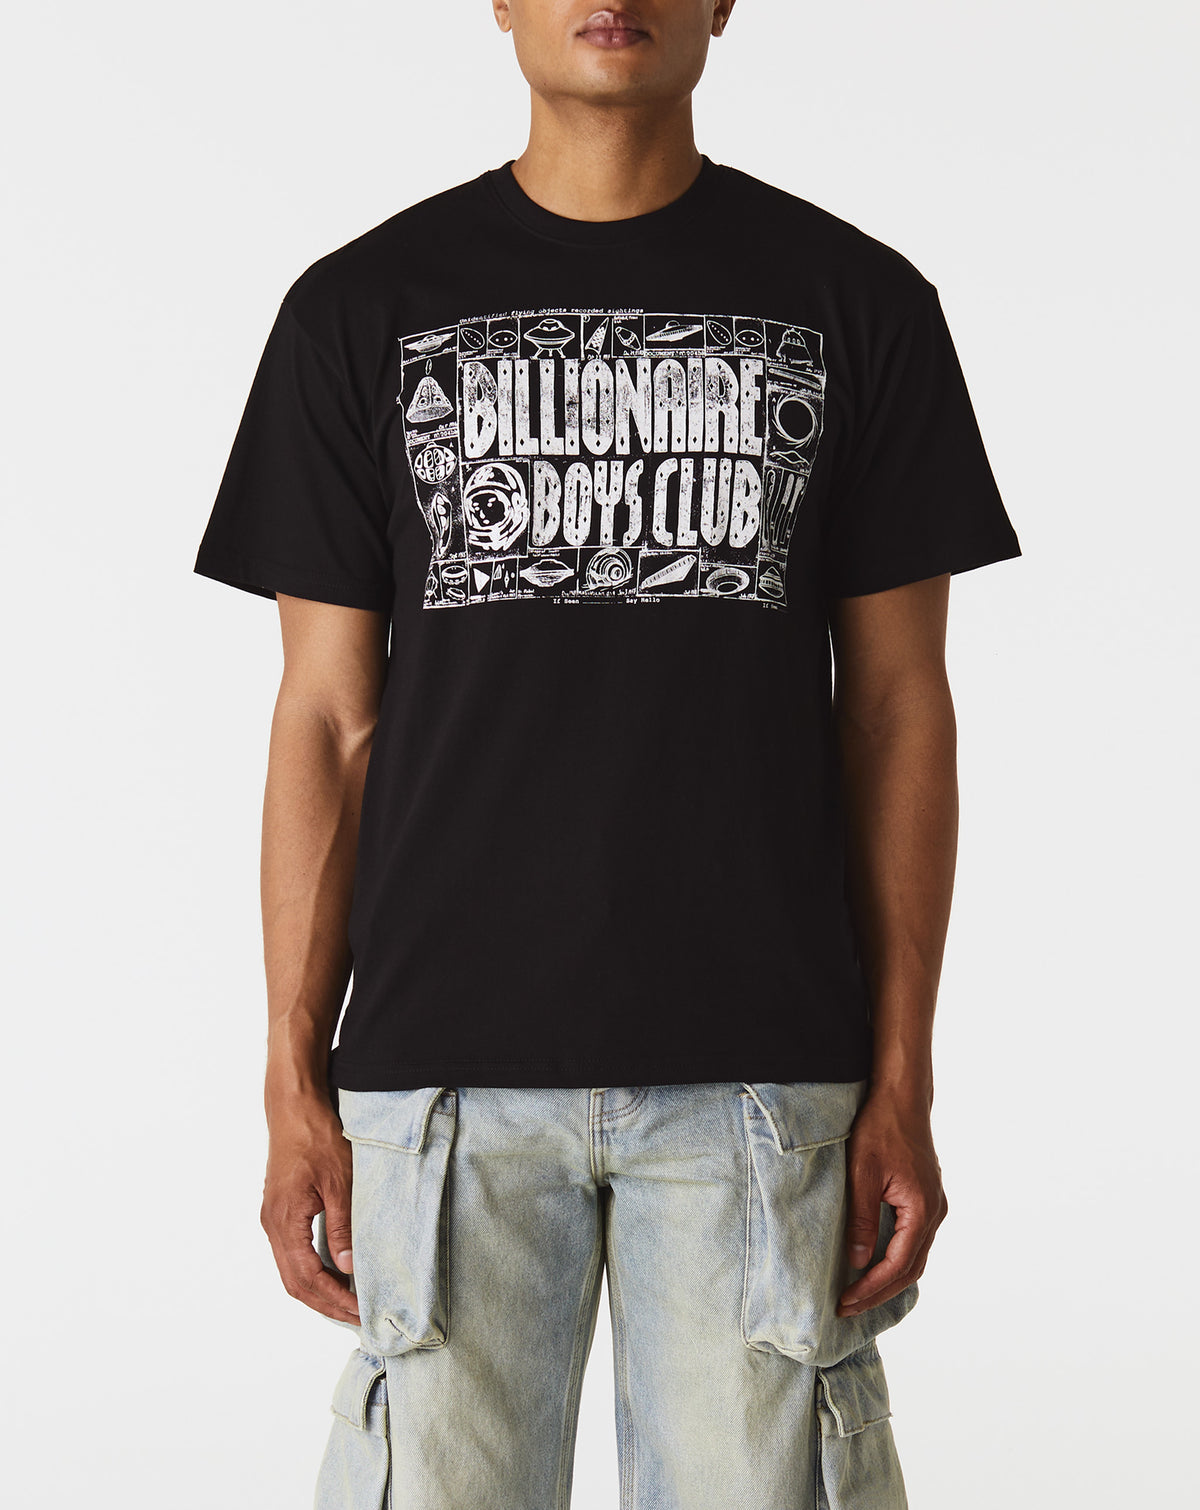 Billionaire Boys Club BB Schematic T-Shirt - Rule of Next Apparel